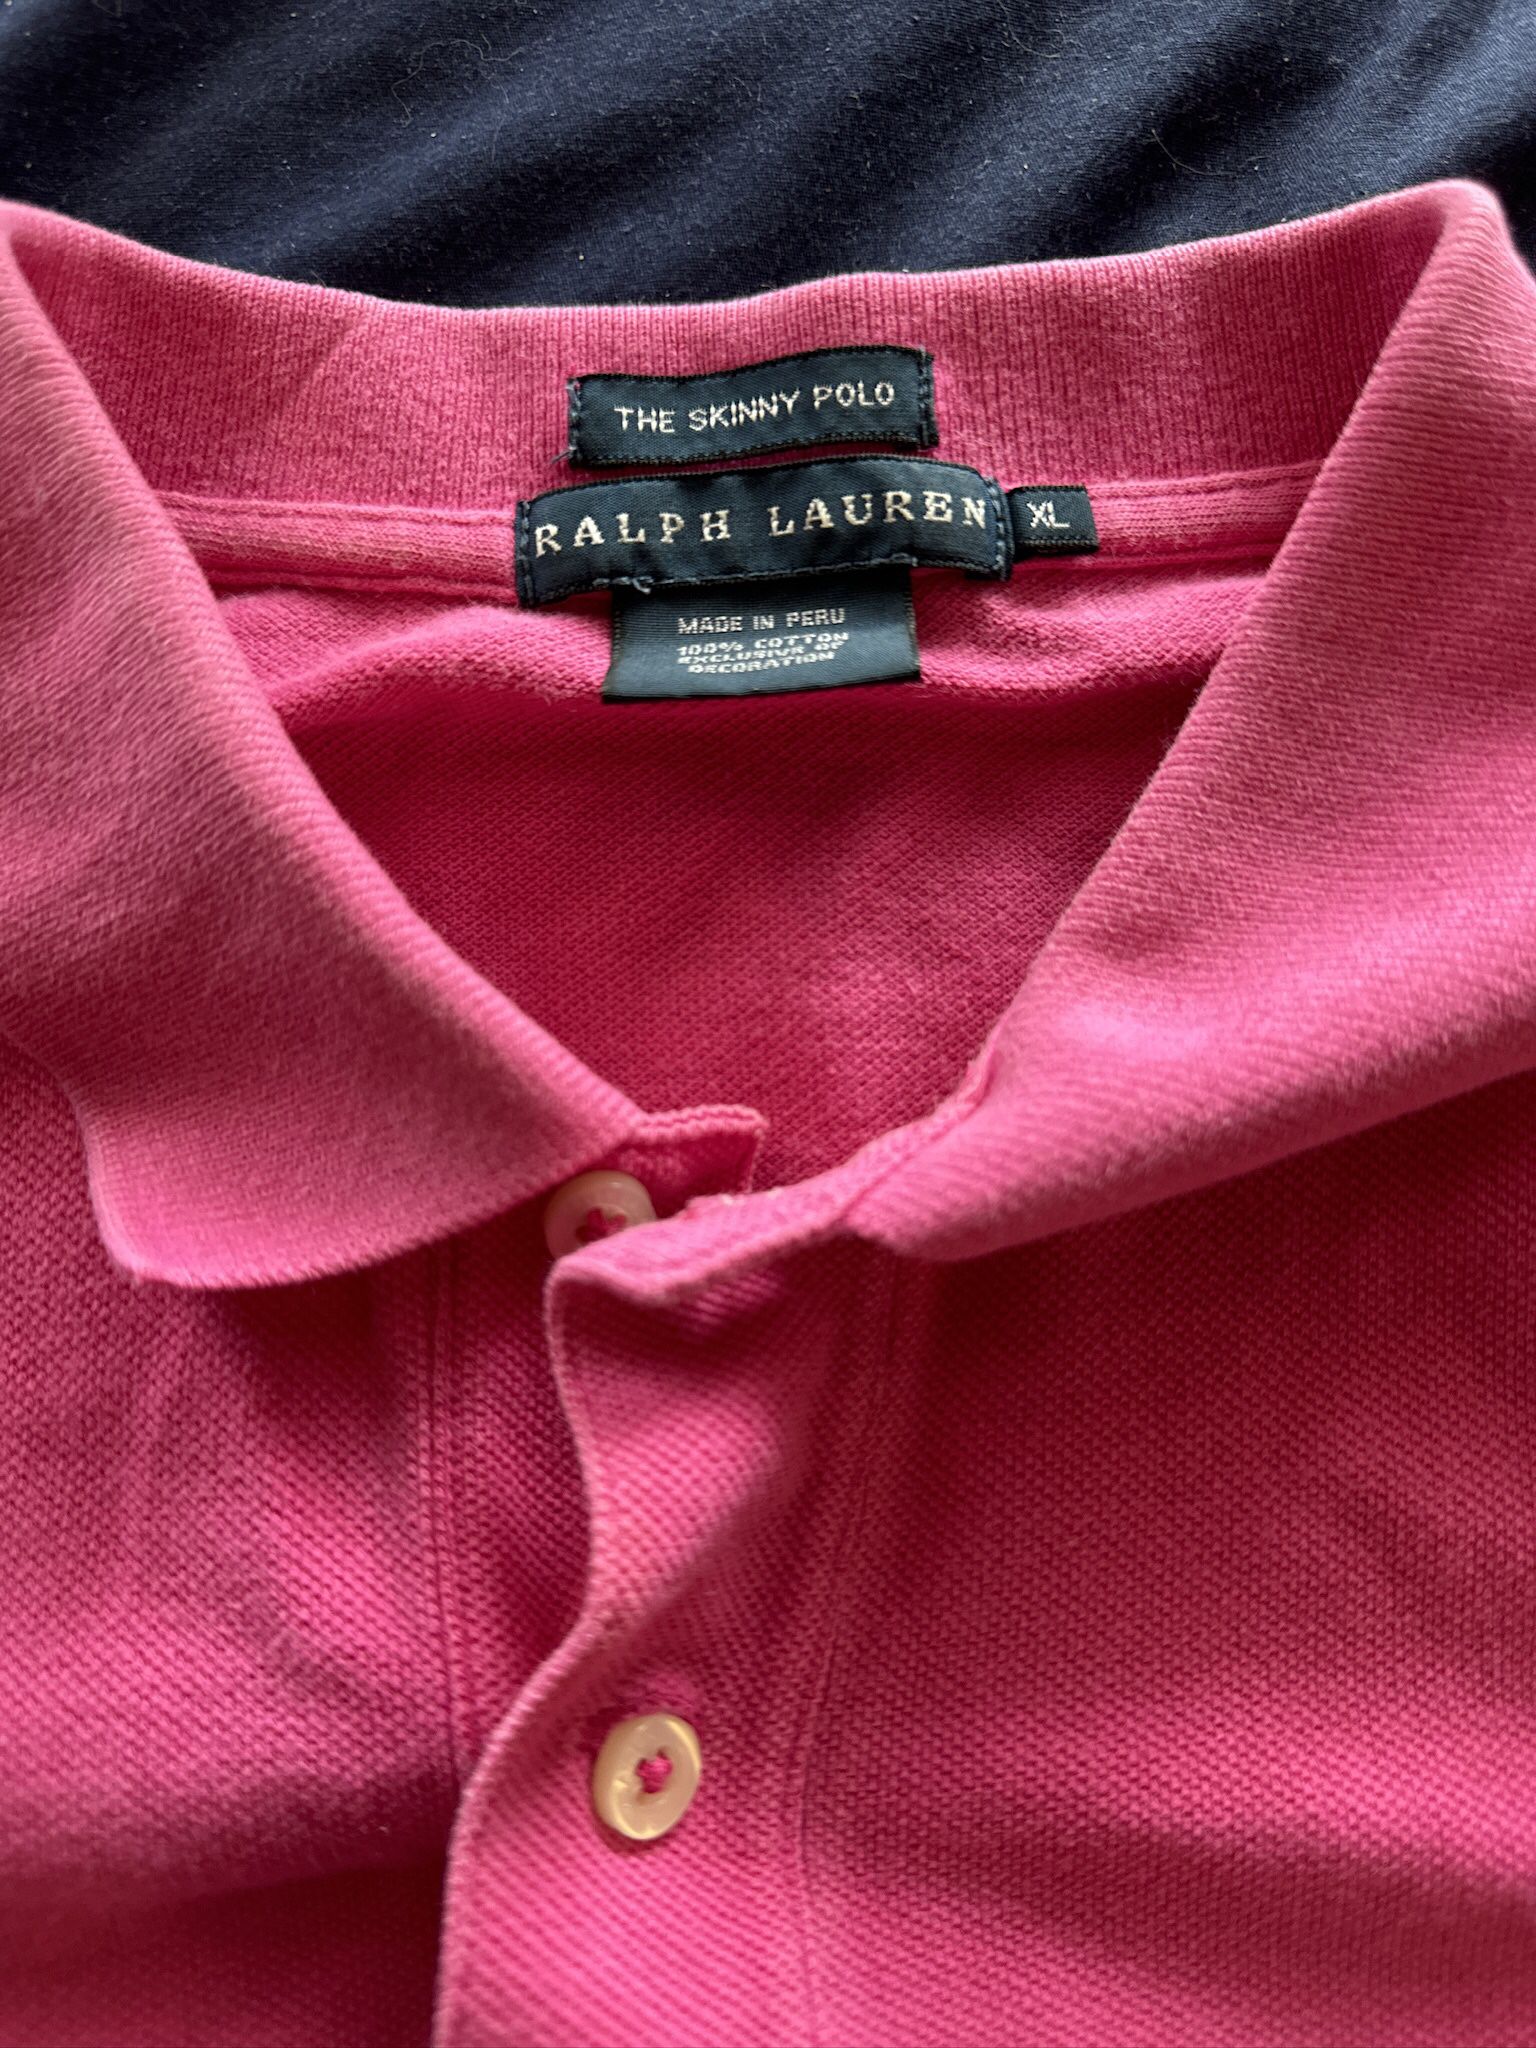 Polo Ralph Lauren Shirt Womens XL Skinny Polo Shirt Pink Green Pony Short Sleeve